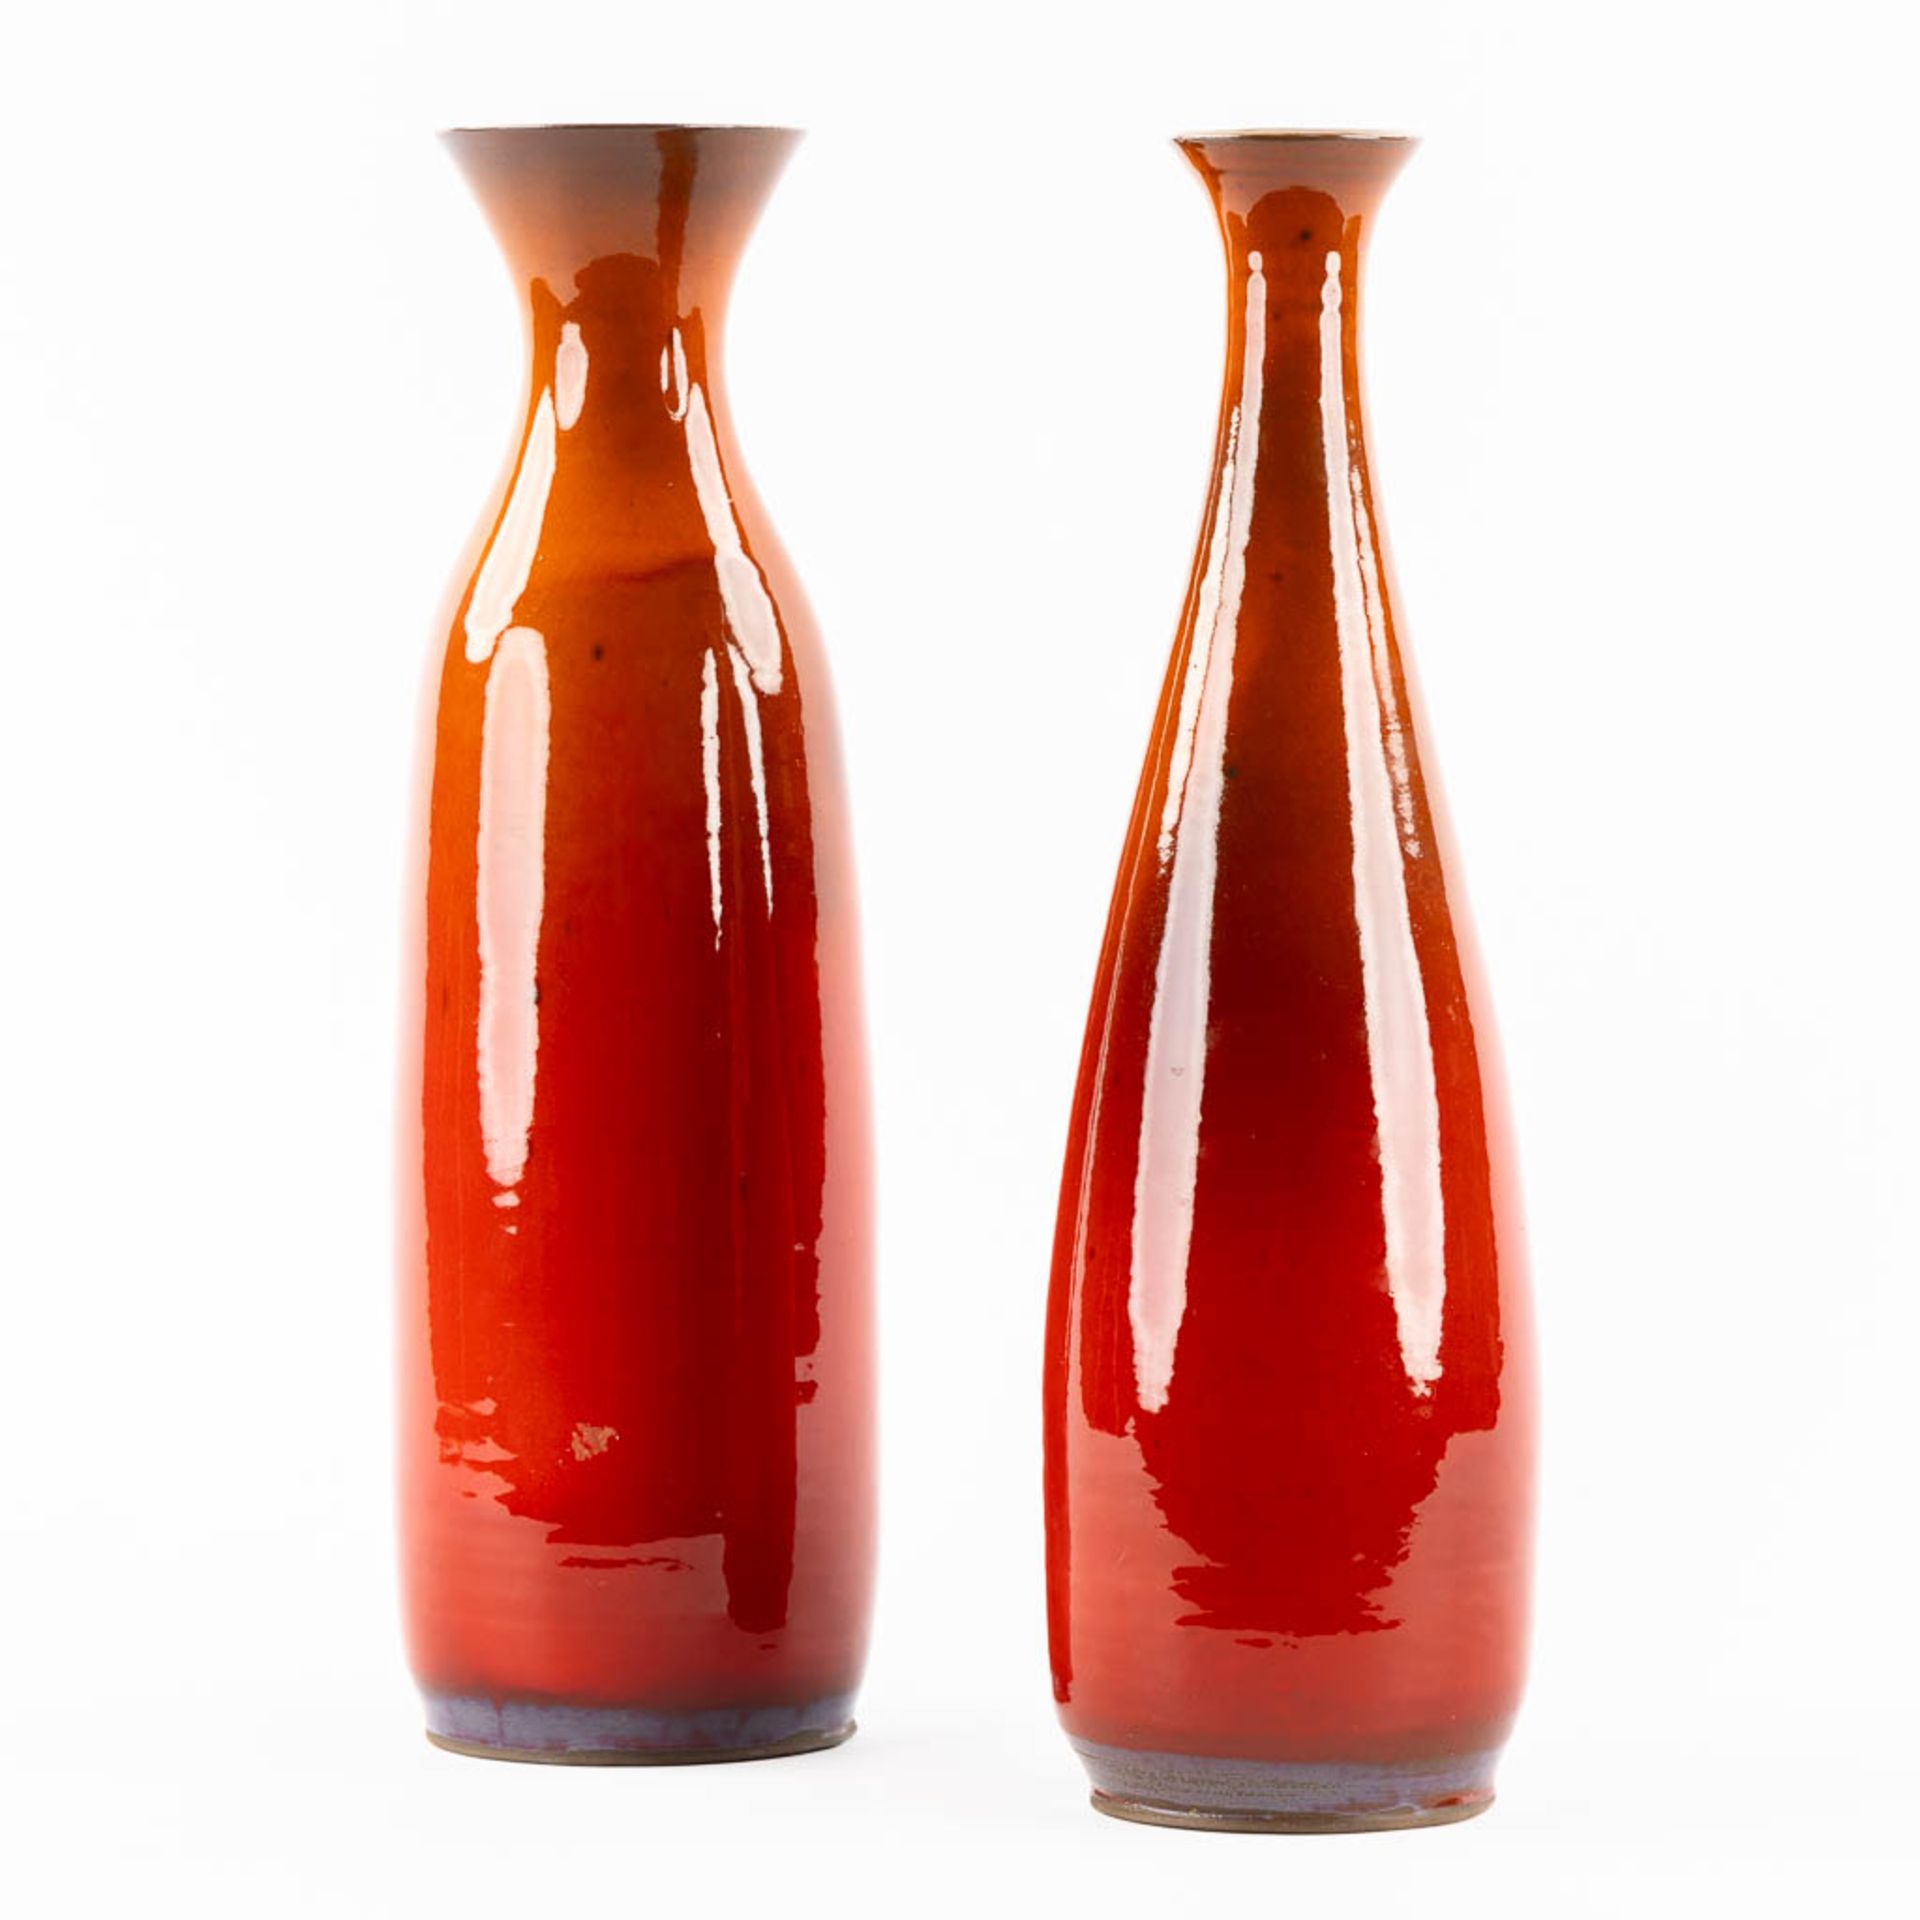 Oswald TIEBERGHIEN (1936) 'Two Vases' glazed ceramics. (H:41 x D:11 cm)